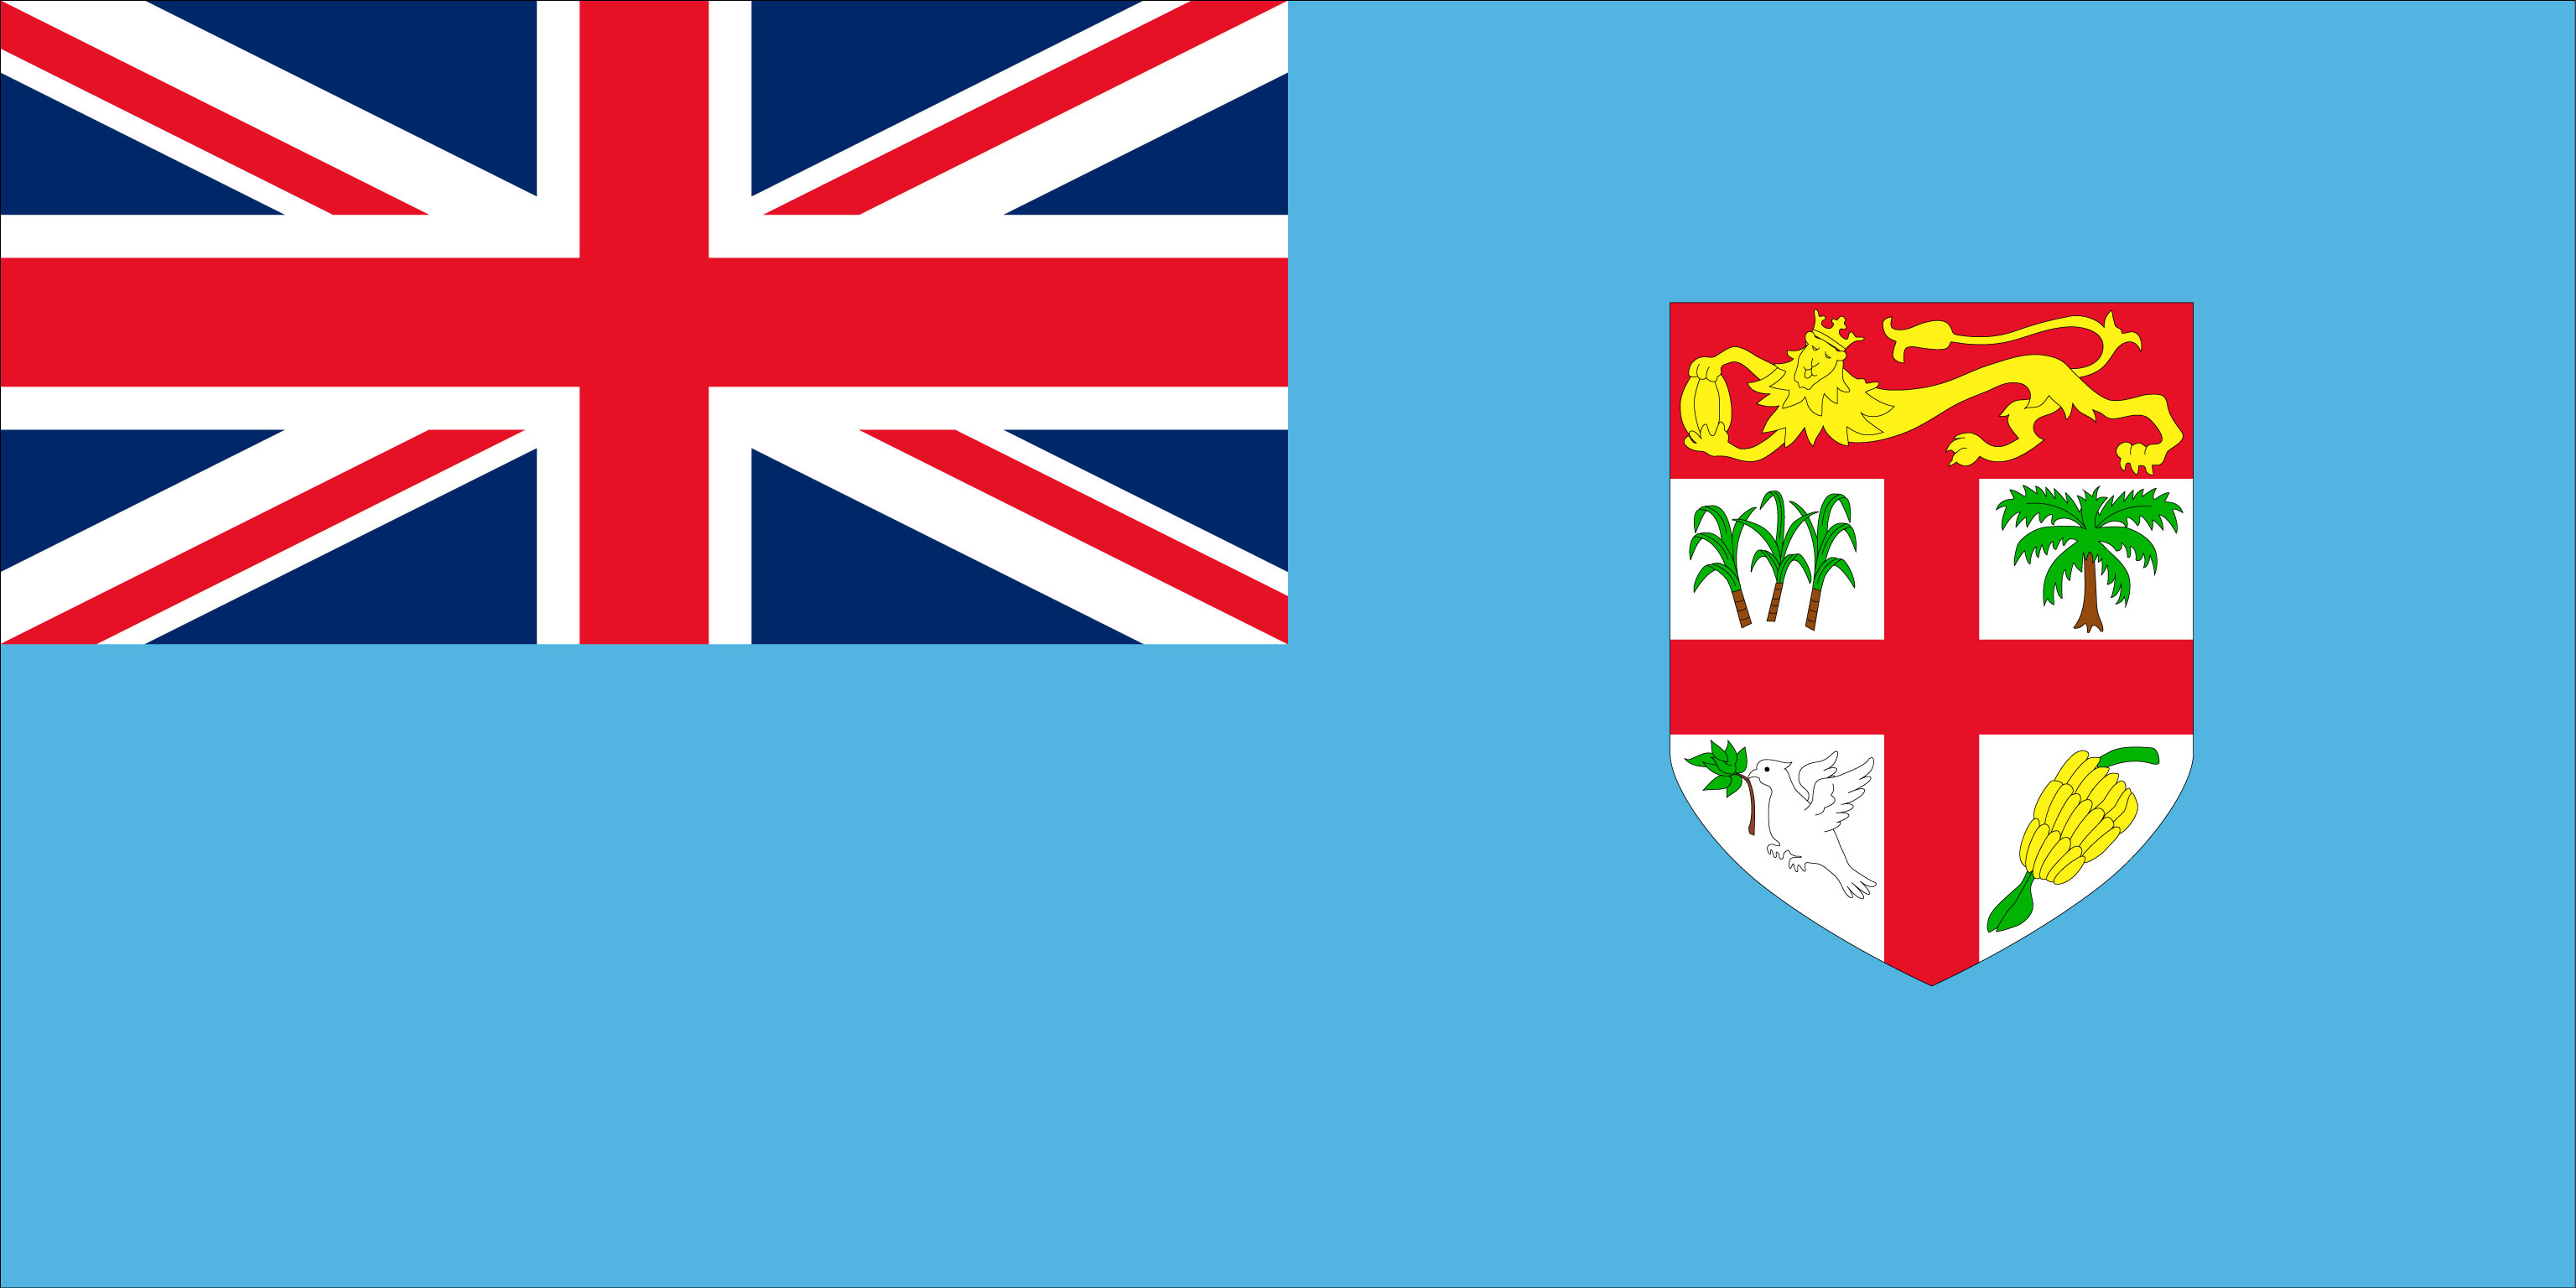 The Fiji Islands